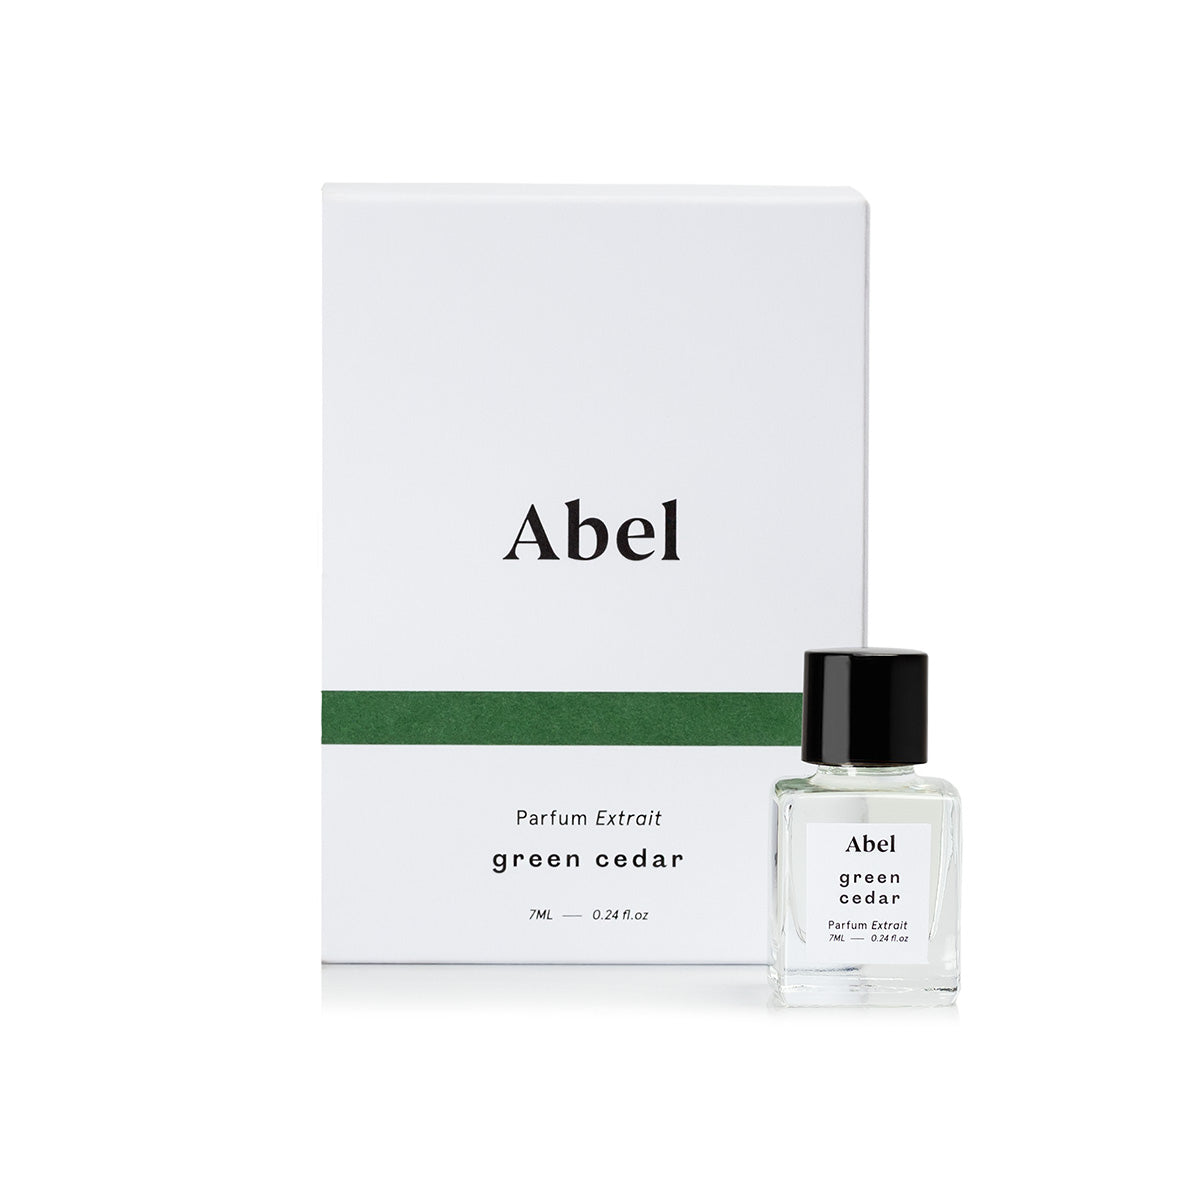 Green Cedar Parfum Extrait 7ml. by Abel at Indigo Perfumery